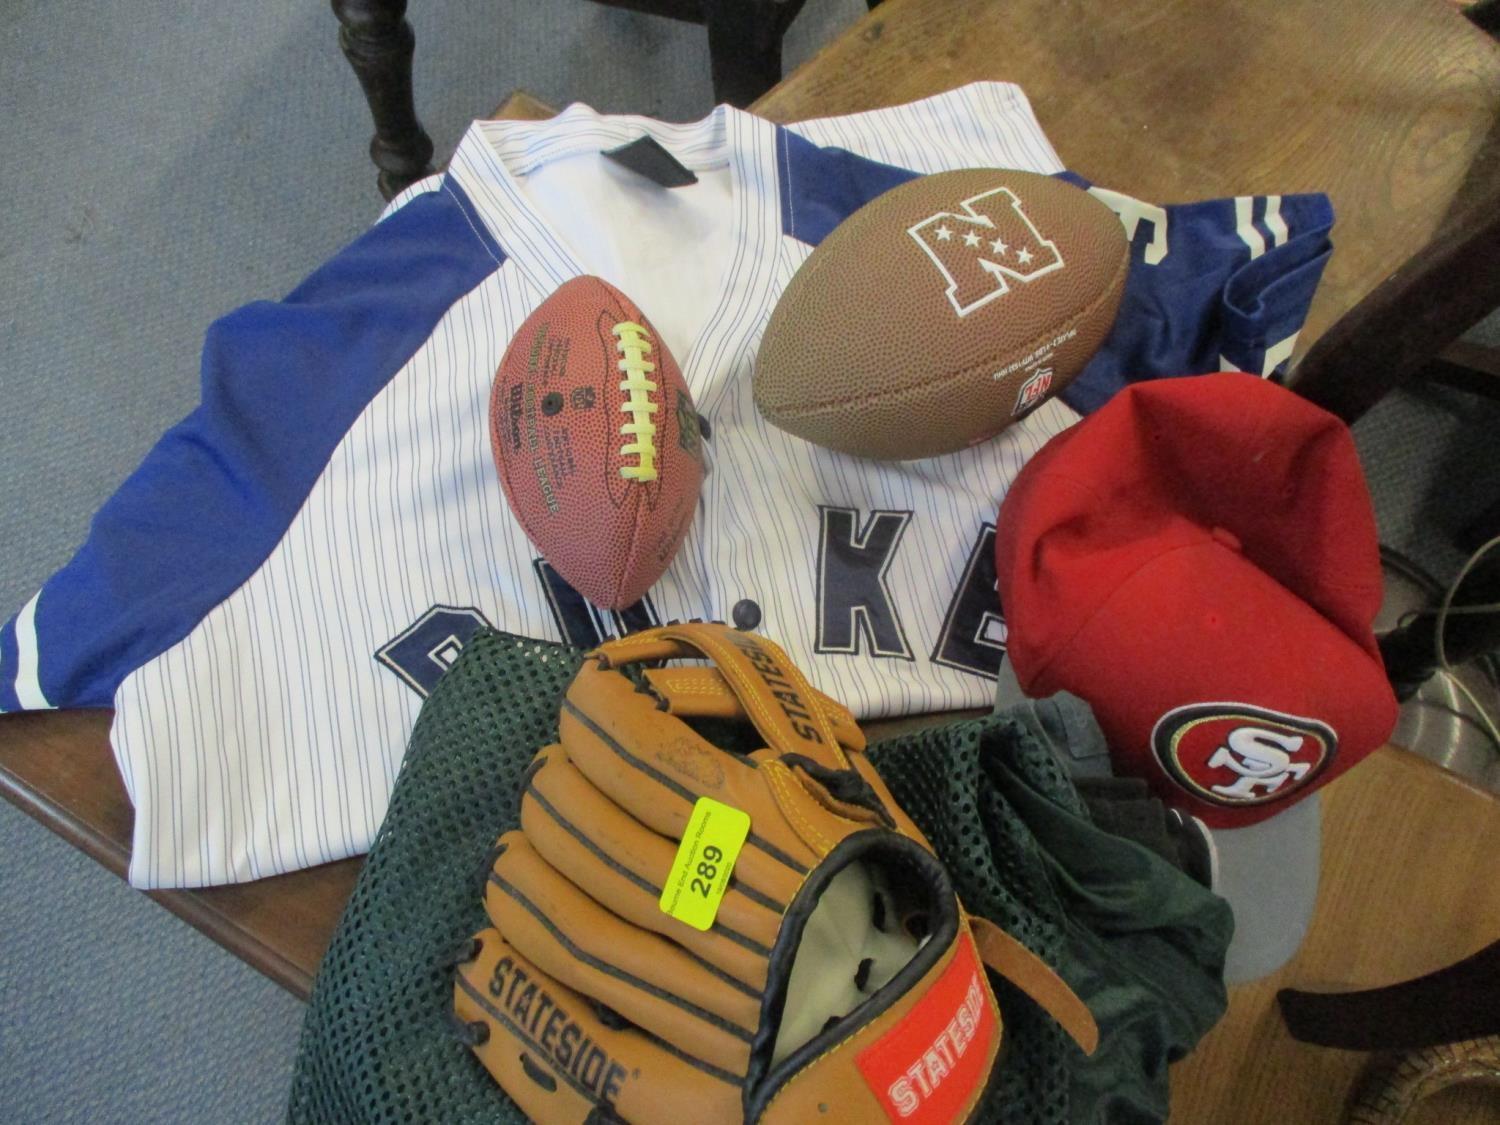 American football and baseball related items